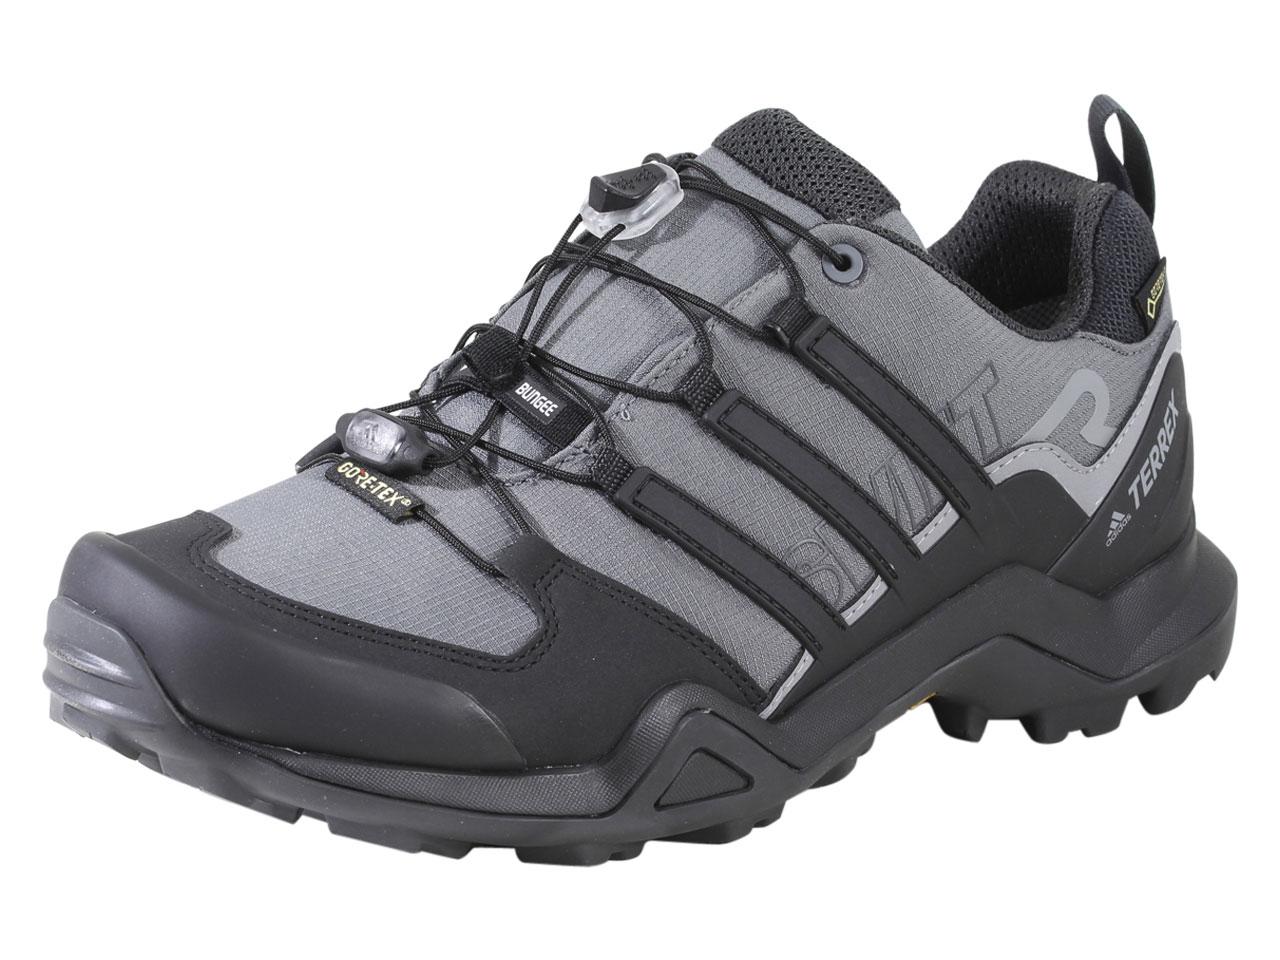 Adidas Men's Terrex Swift R2 GTX Hiking Sneakers Shoes - Grey Five/Black/Carbon - 10 D(M) US